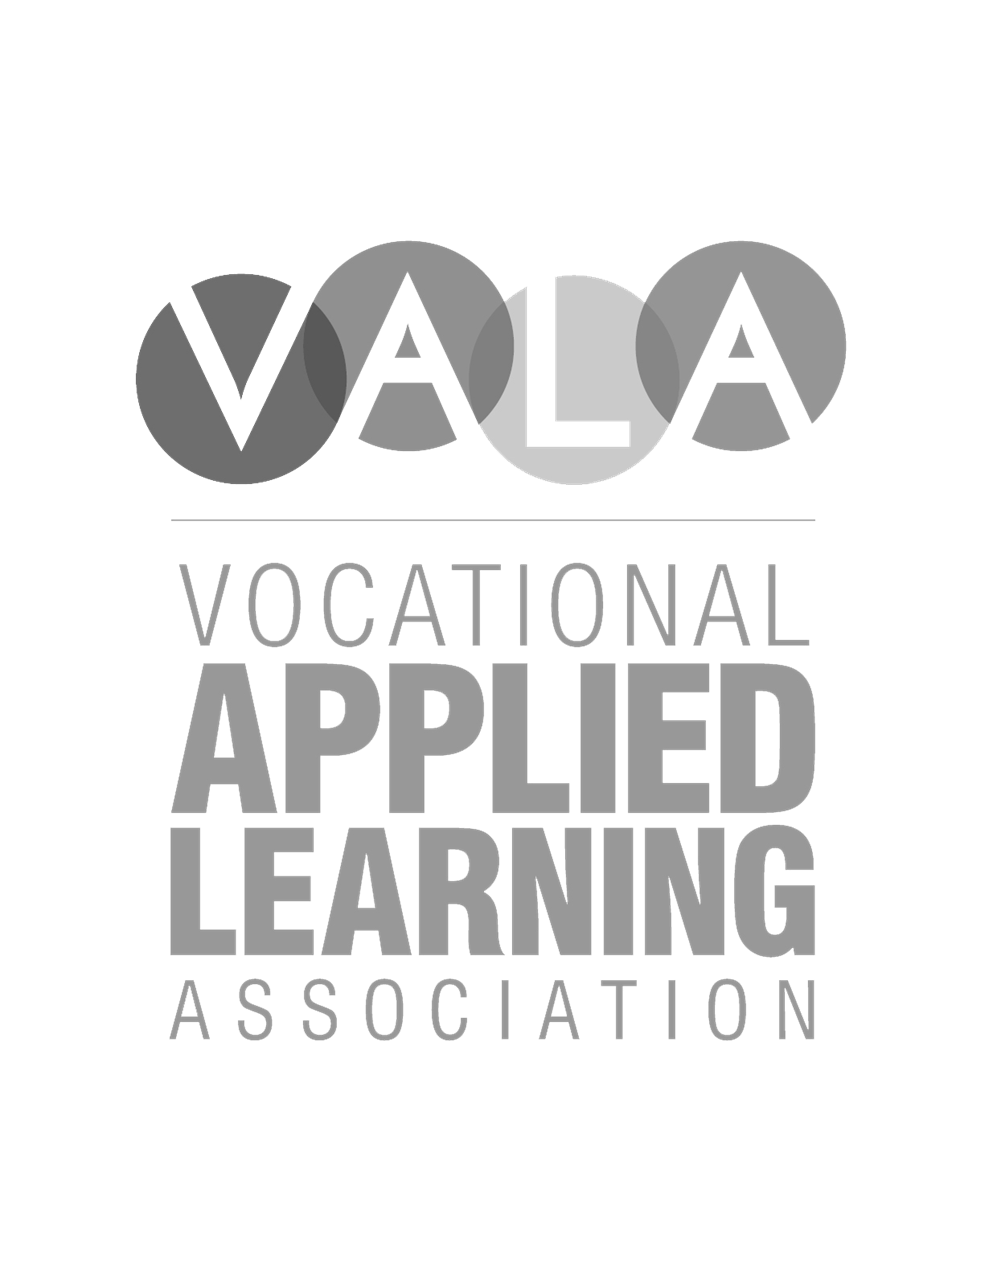 Vocational Learning Association